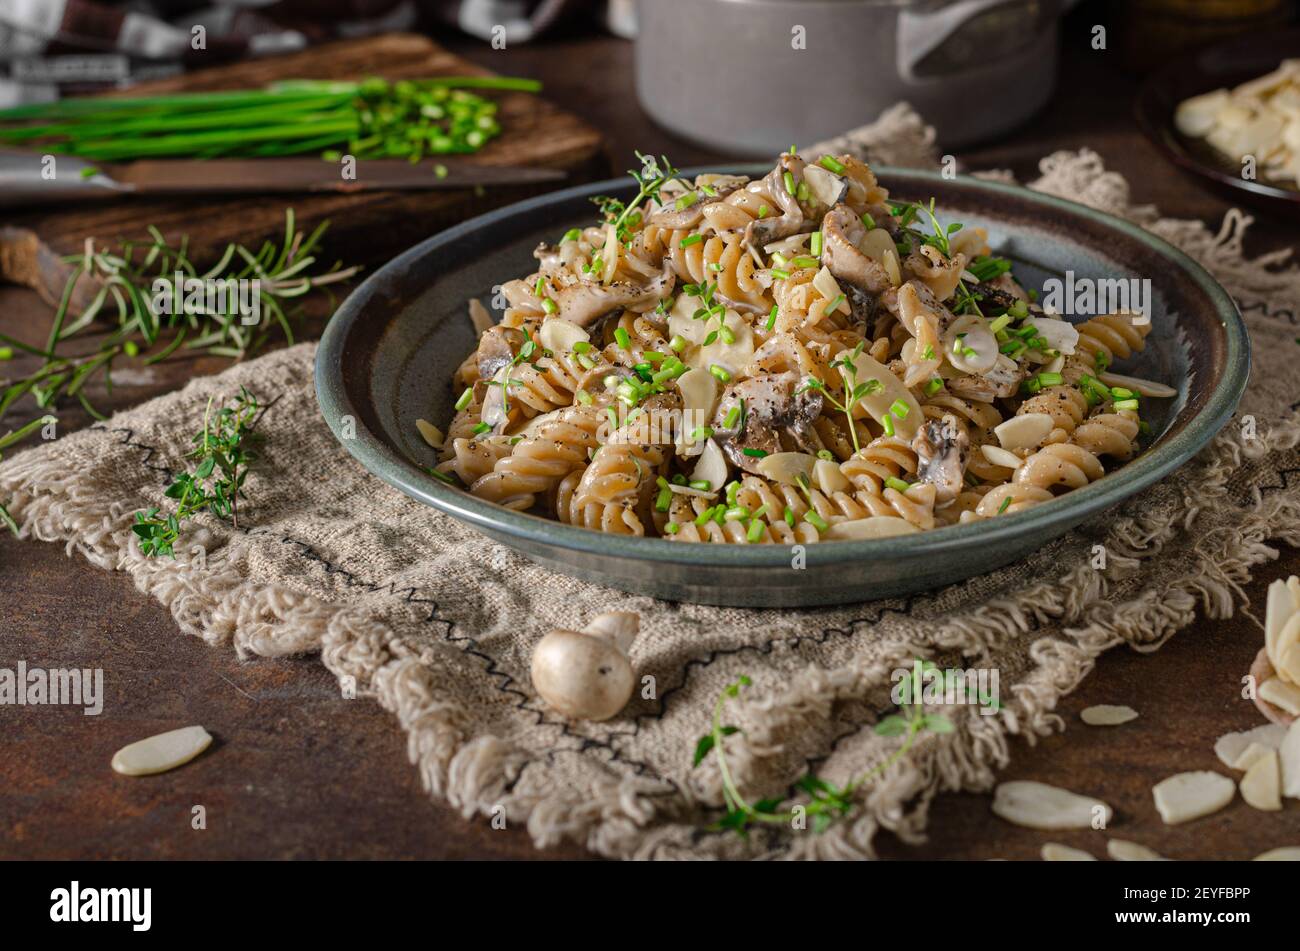 Original creamy pasta with mushrooms, herbs and almond slices Stock Photo